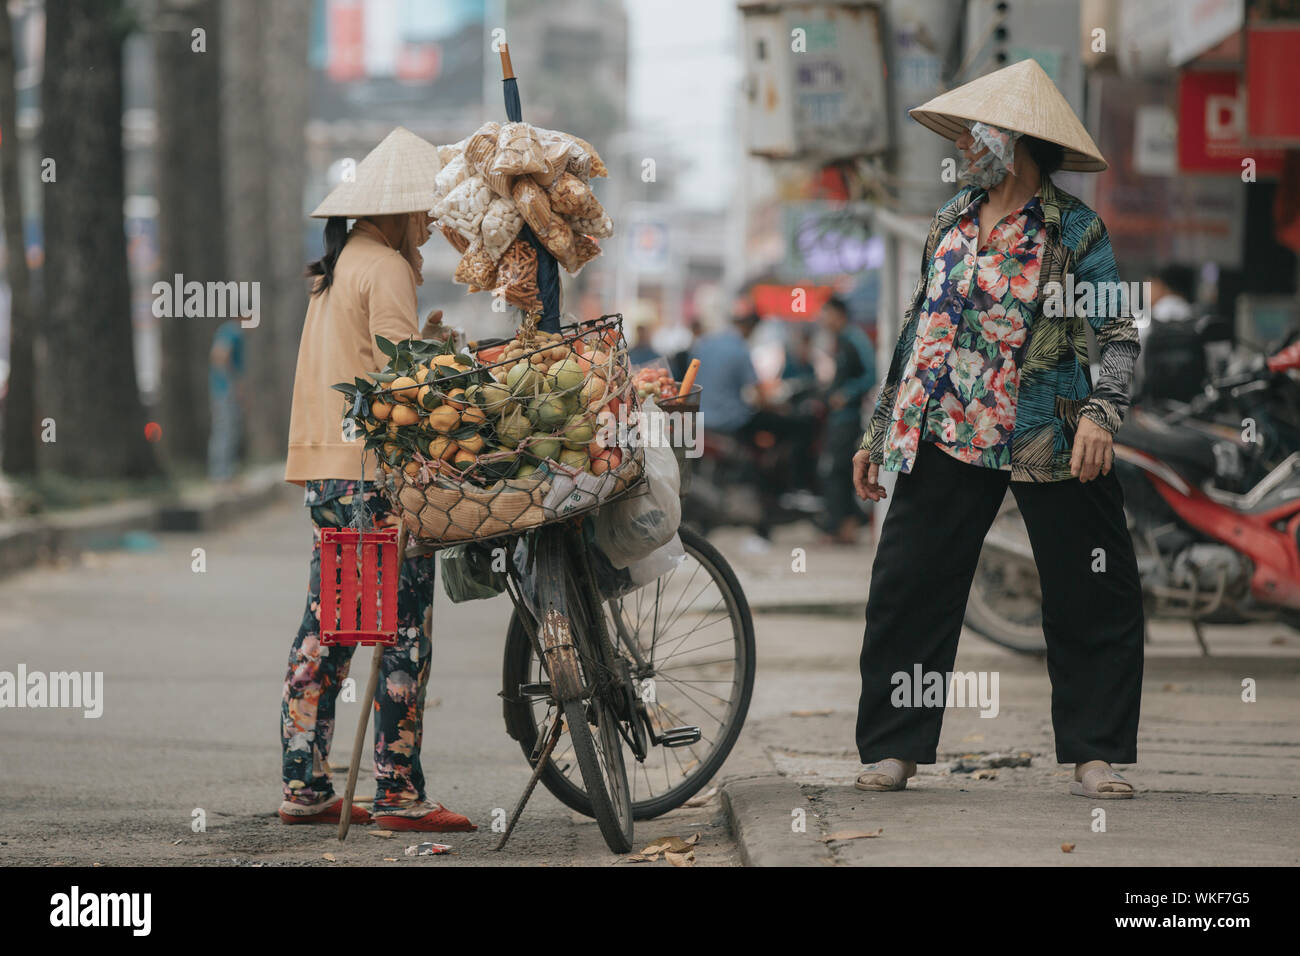 SAIGON, VIETNAM - November 1, 2016: People on the streets of Saigon on October 31, 2016, Vietnam. Stock Photo